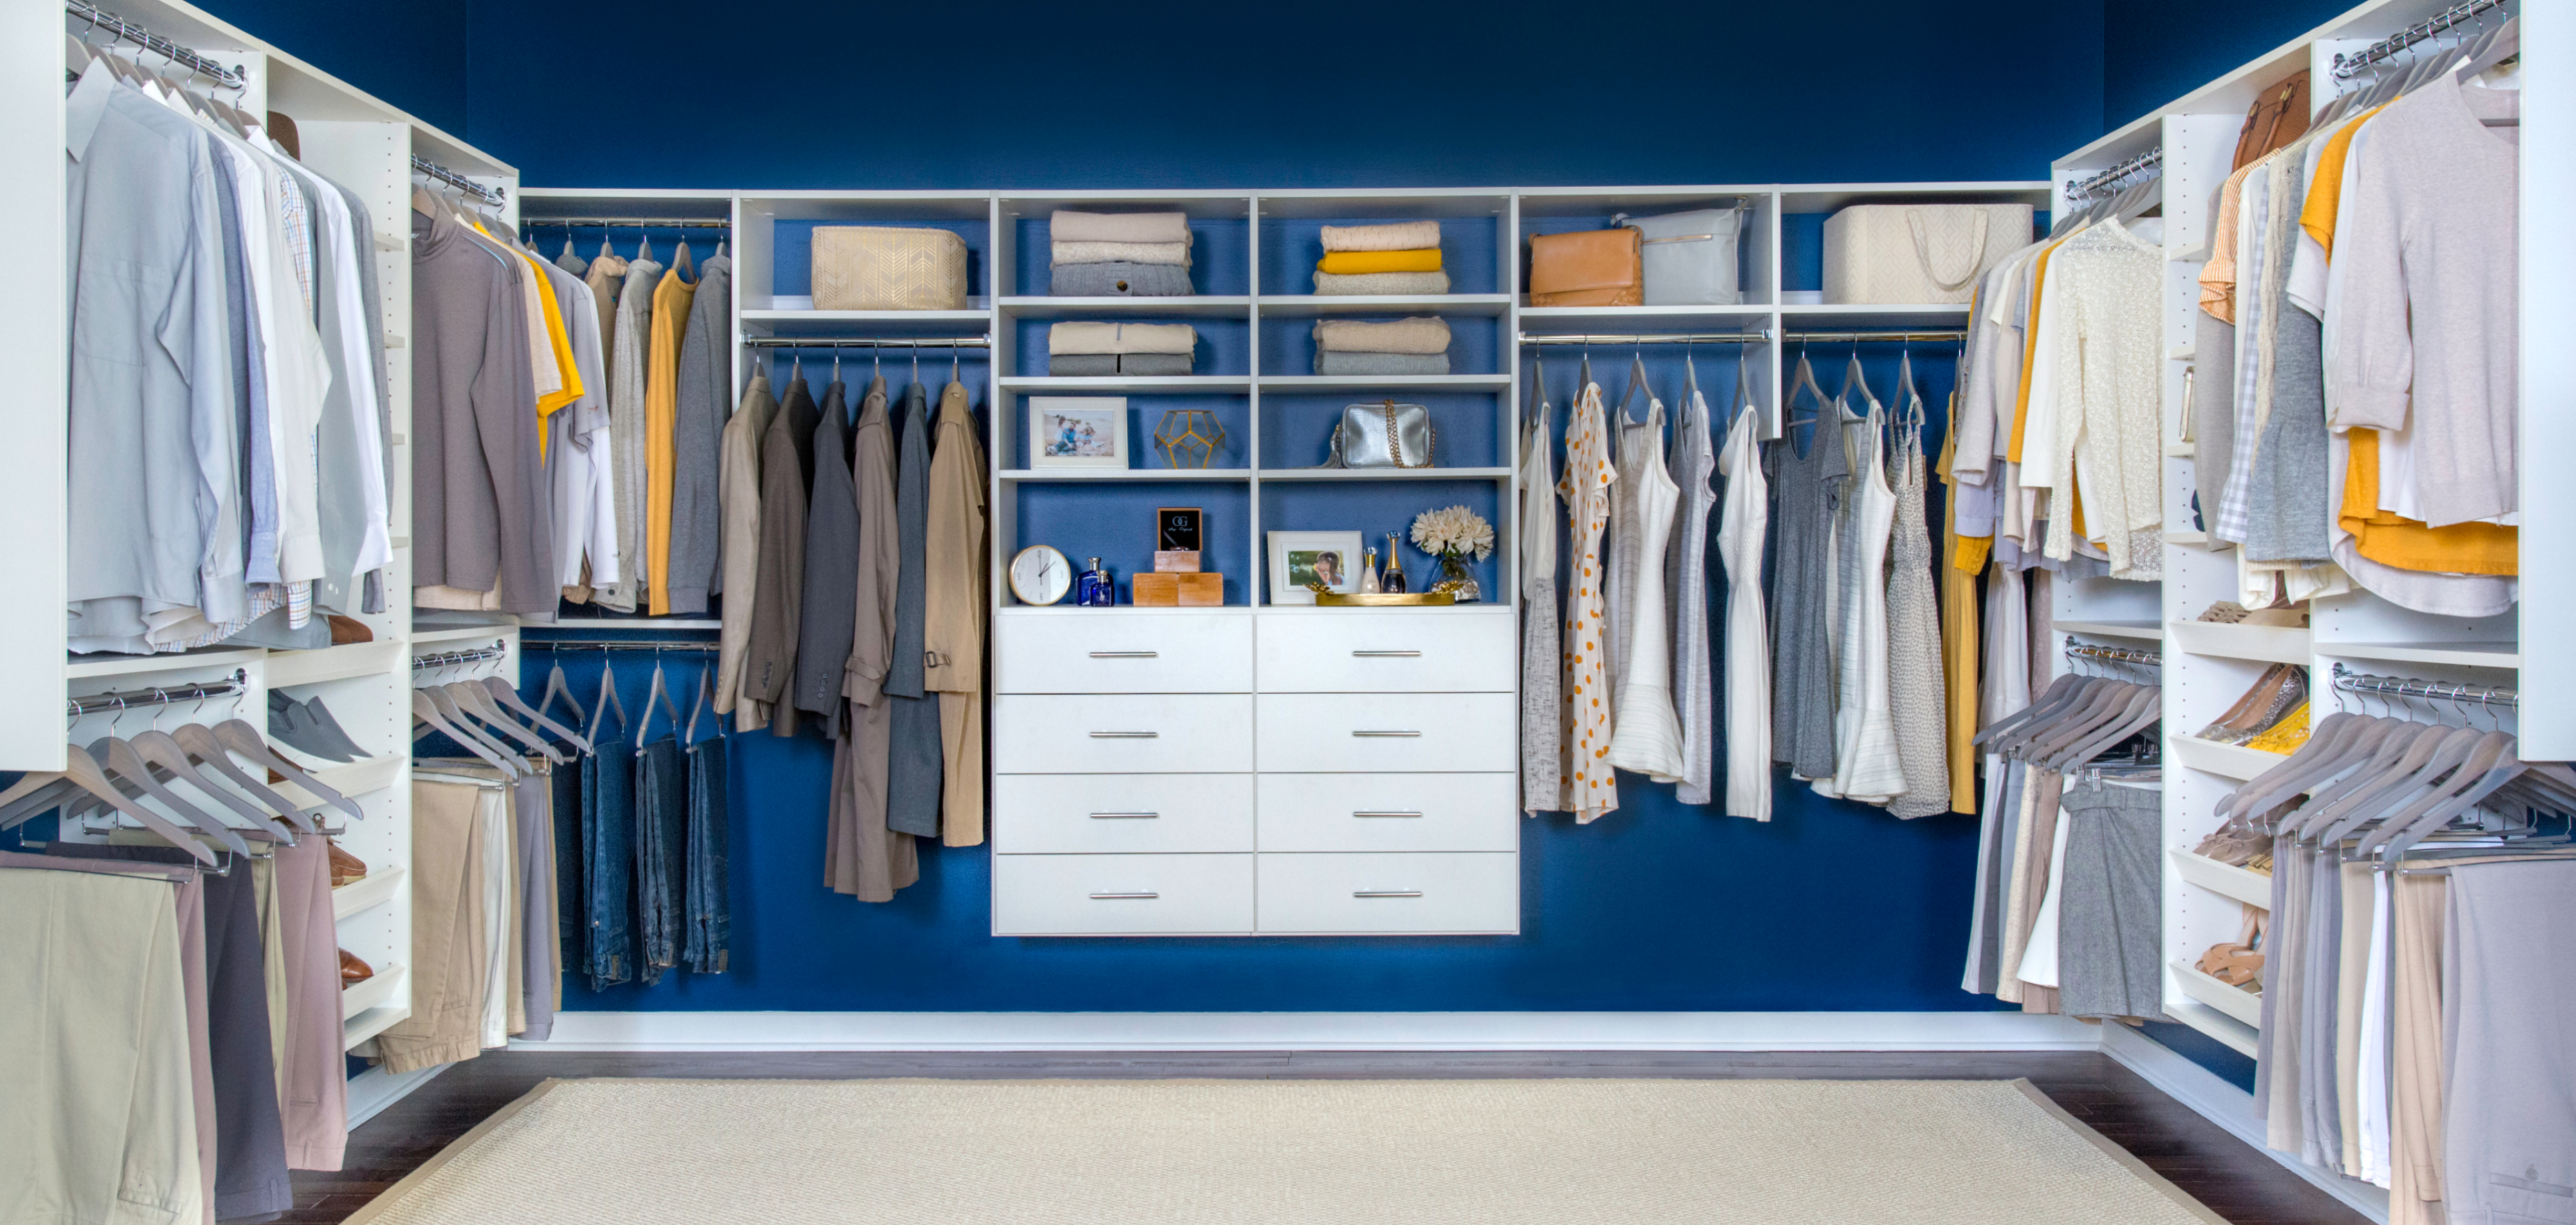 Walk in closet neatly organized